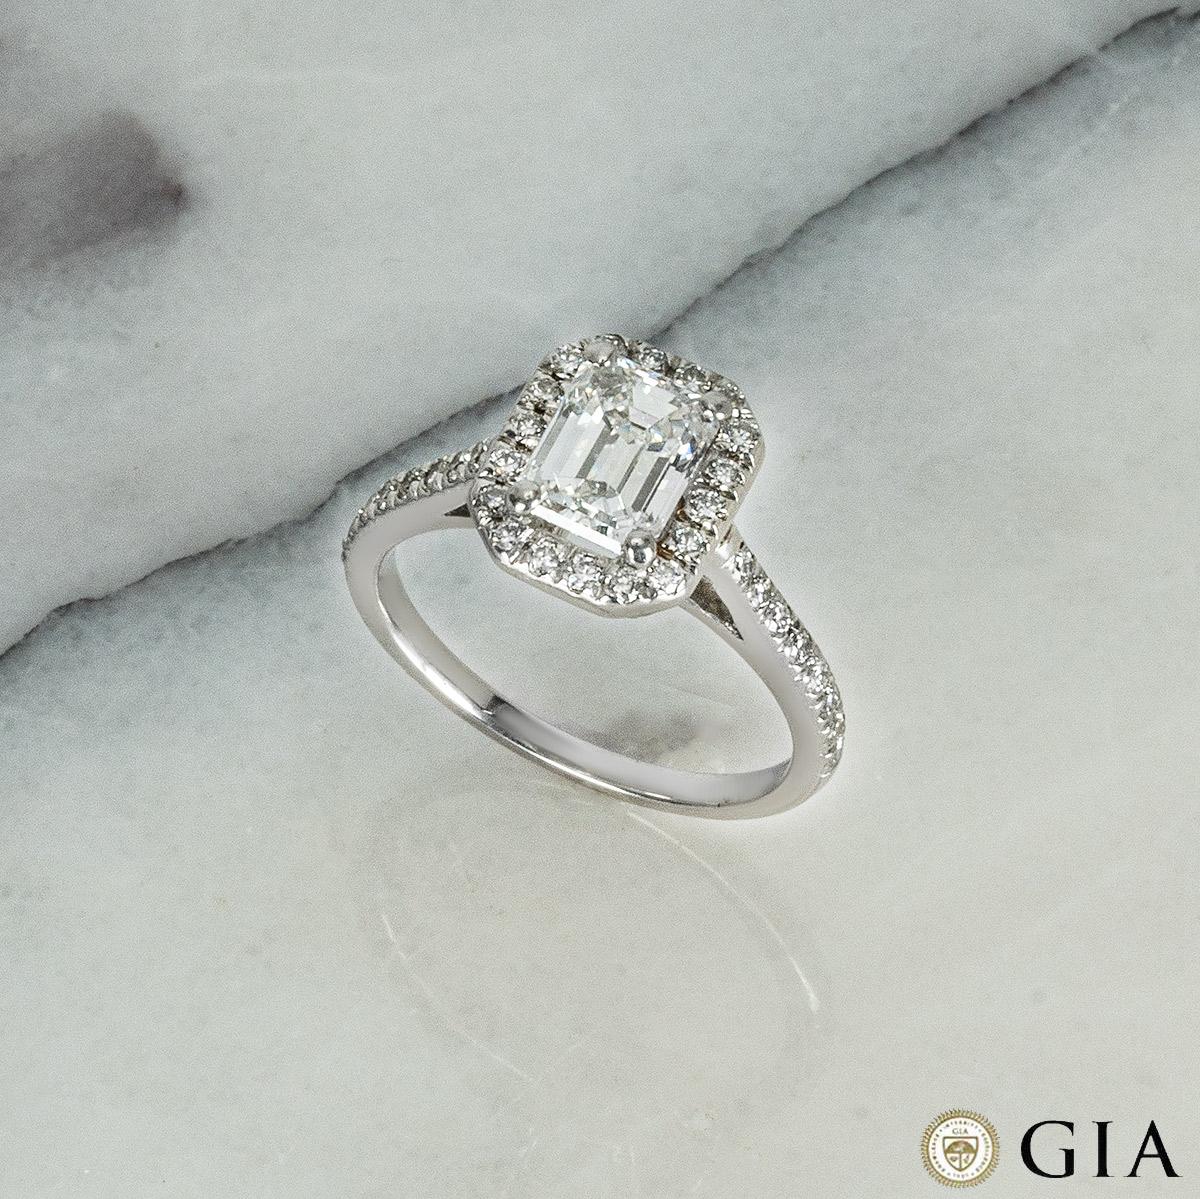 GIA Certified Platinum Emerald Cut Diamond Engagement Ring 1.21 Carat D/VVS2 For Sale 1